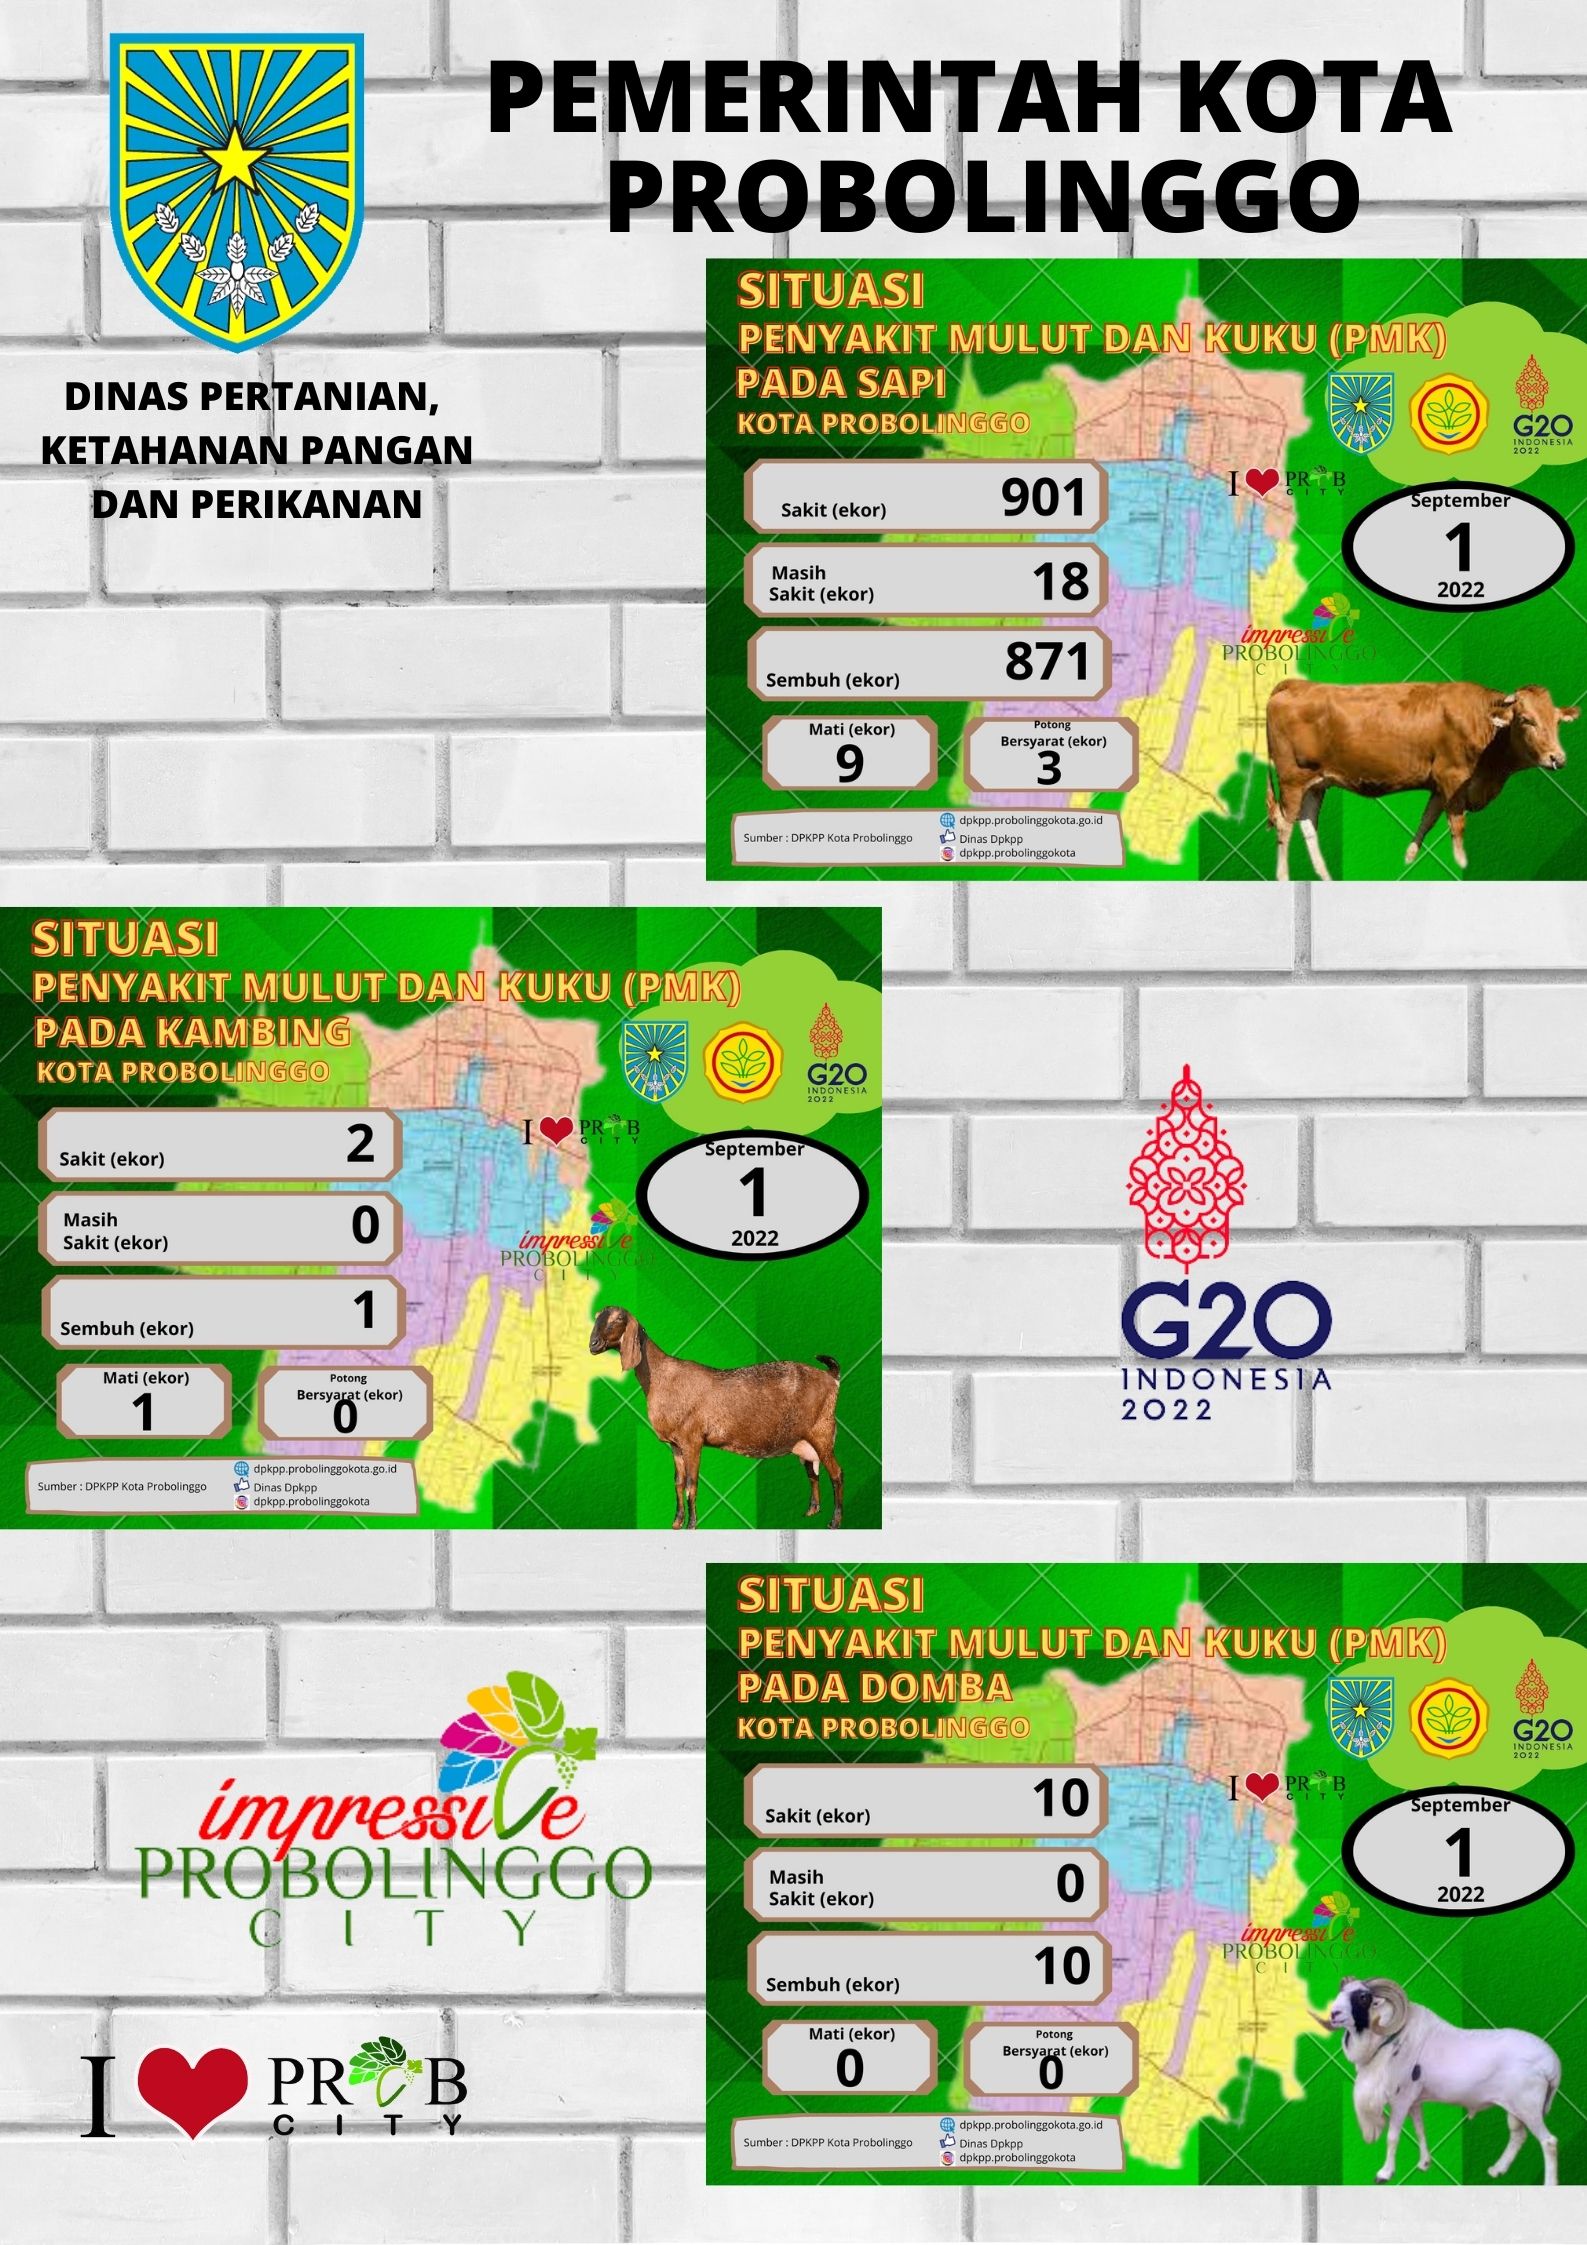 Data Perkembangan Penanganan Penyakit Mulut Dan Kuku (PMK) Di Kota Probolinggo Per Tanggal 1 September 2022